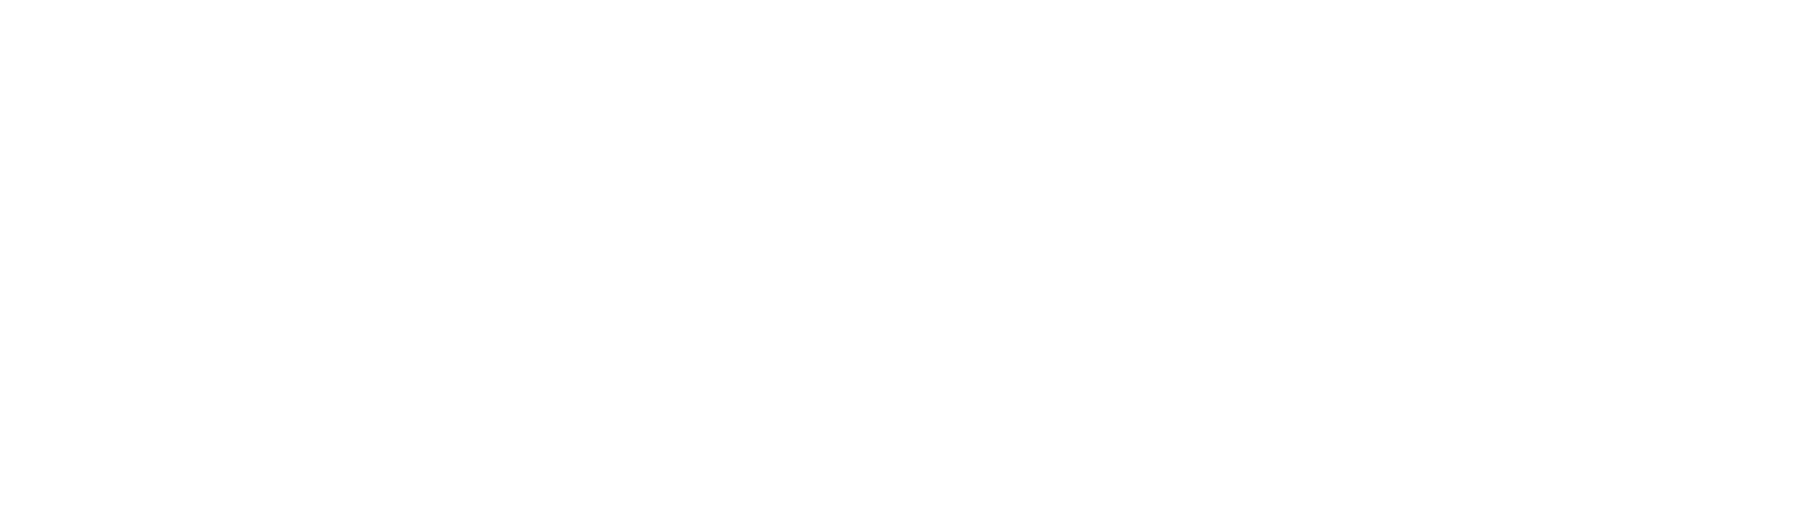 WAE Logo (Work Available Everywhere) in white.